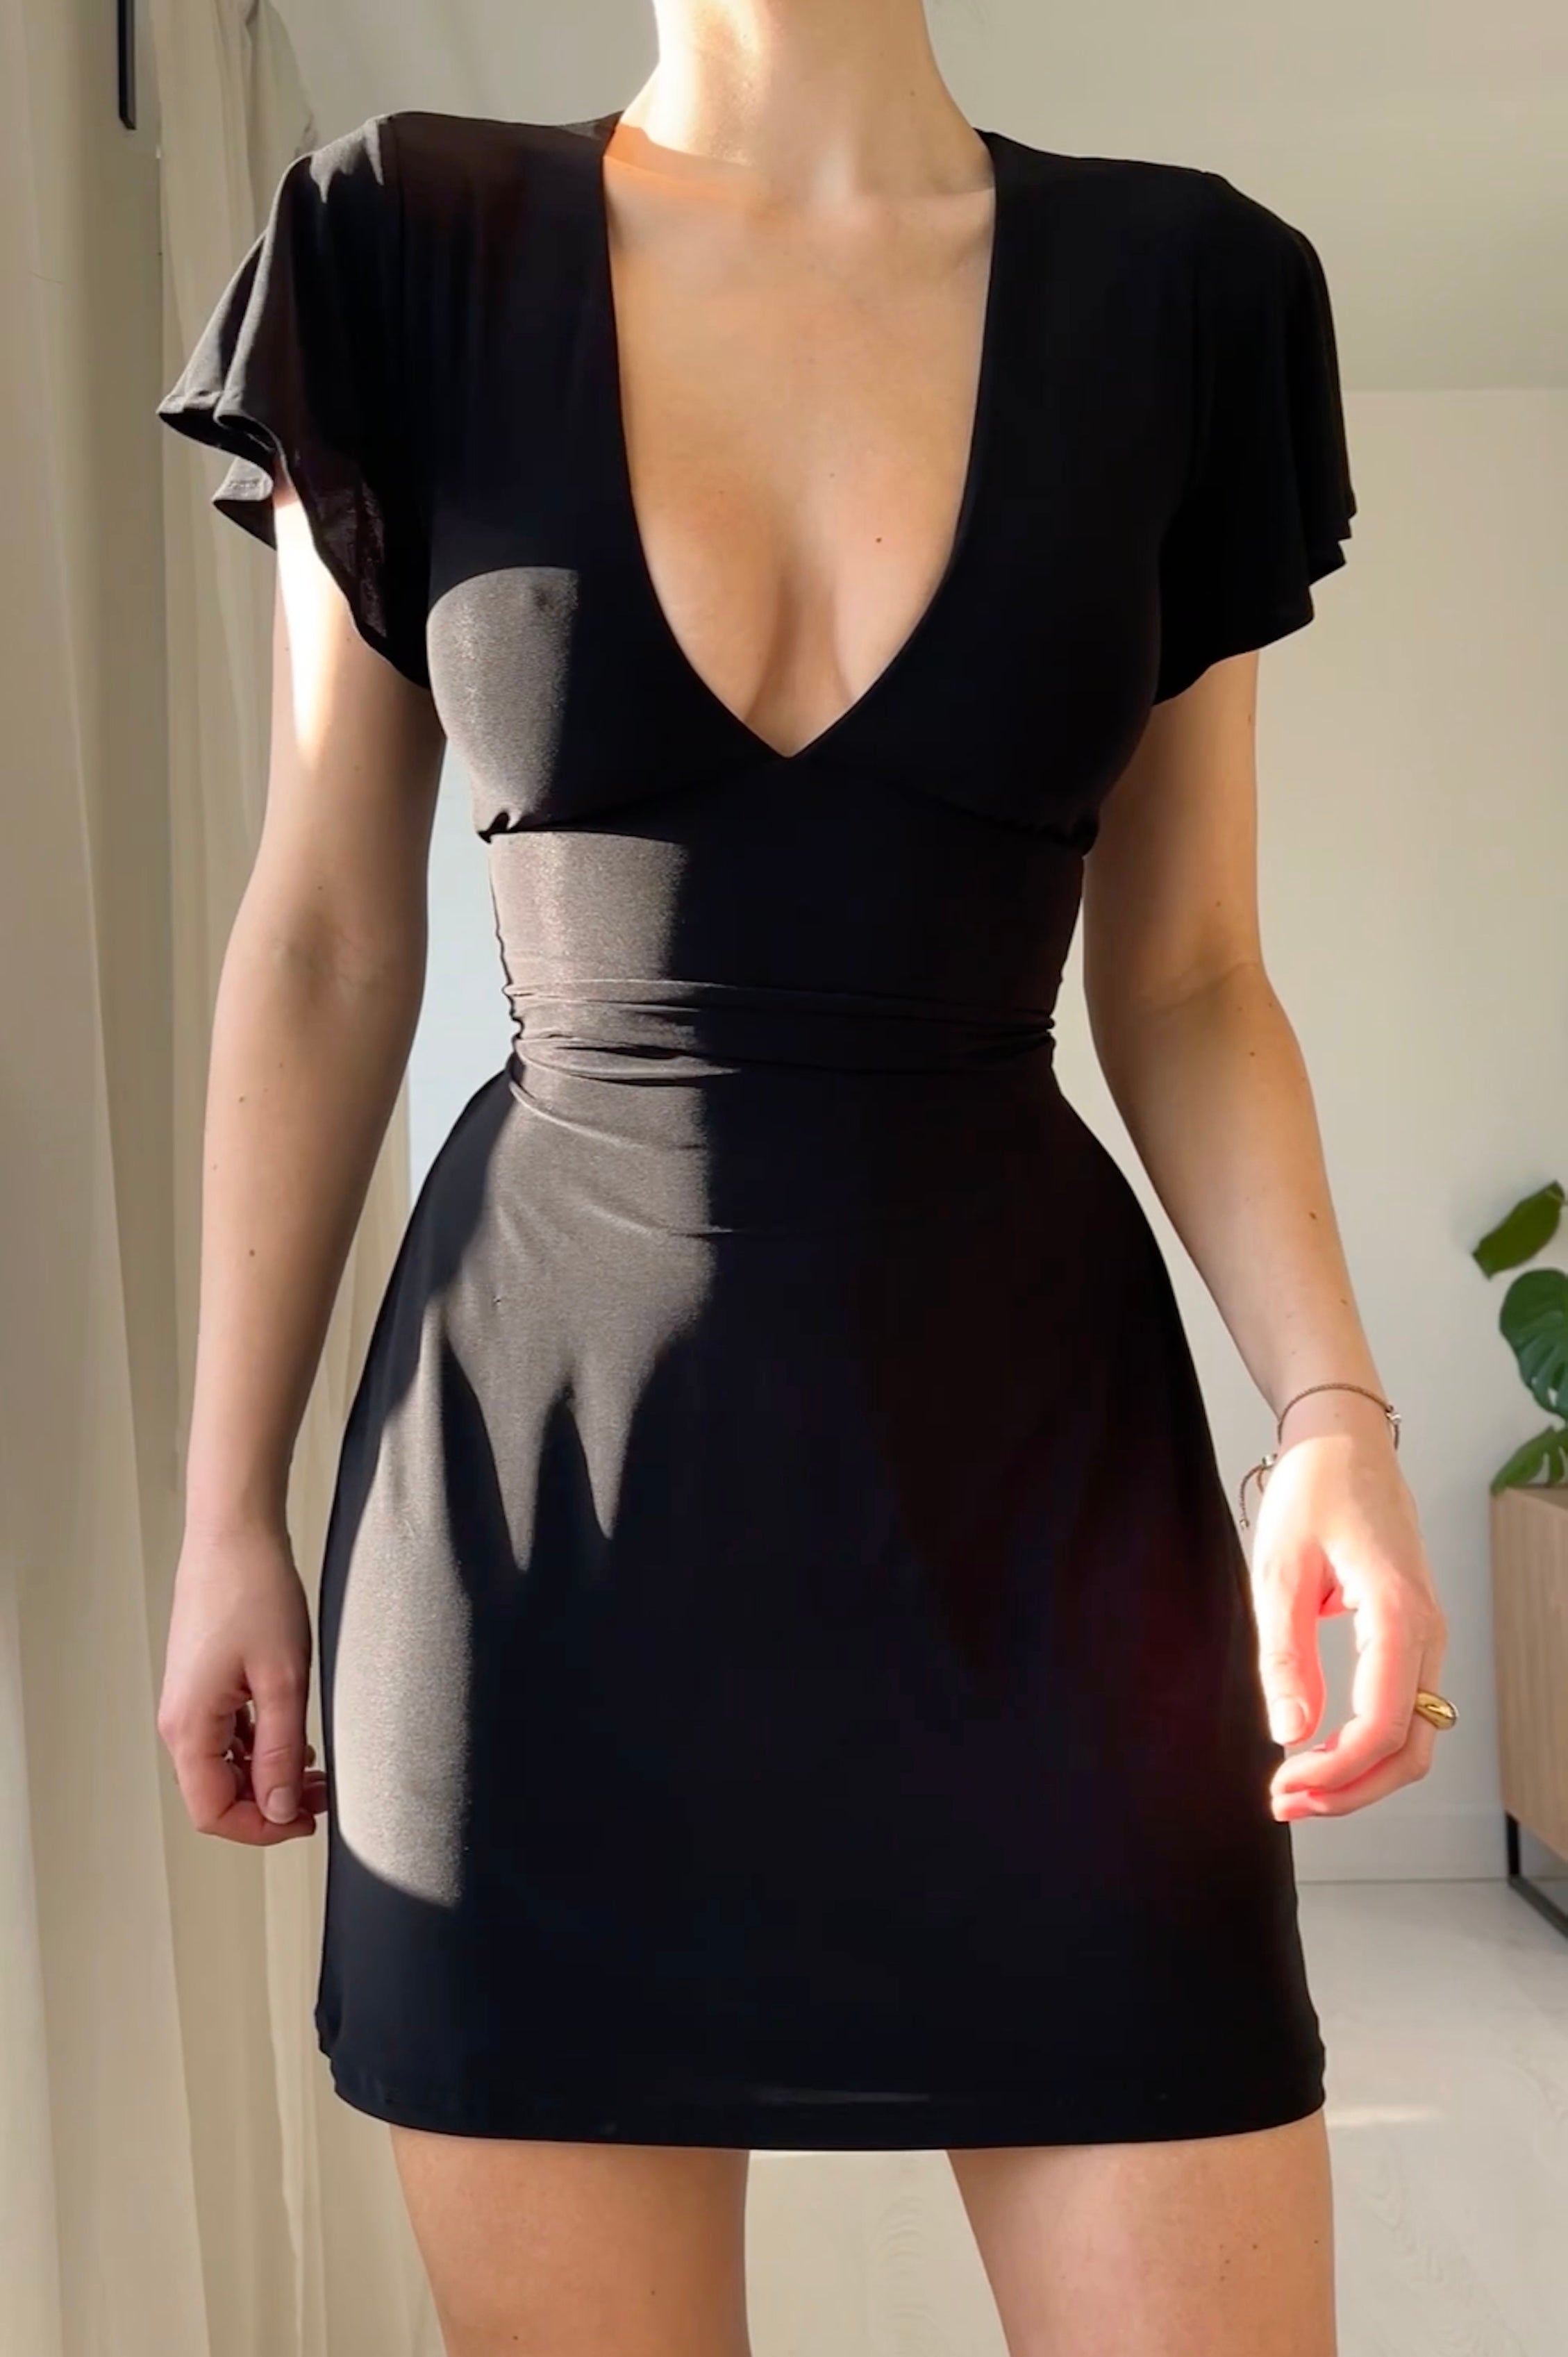 AYM on Instagram: “Our 'Bond' Mini Dress in Khaki. A staple dress